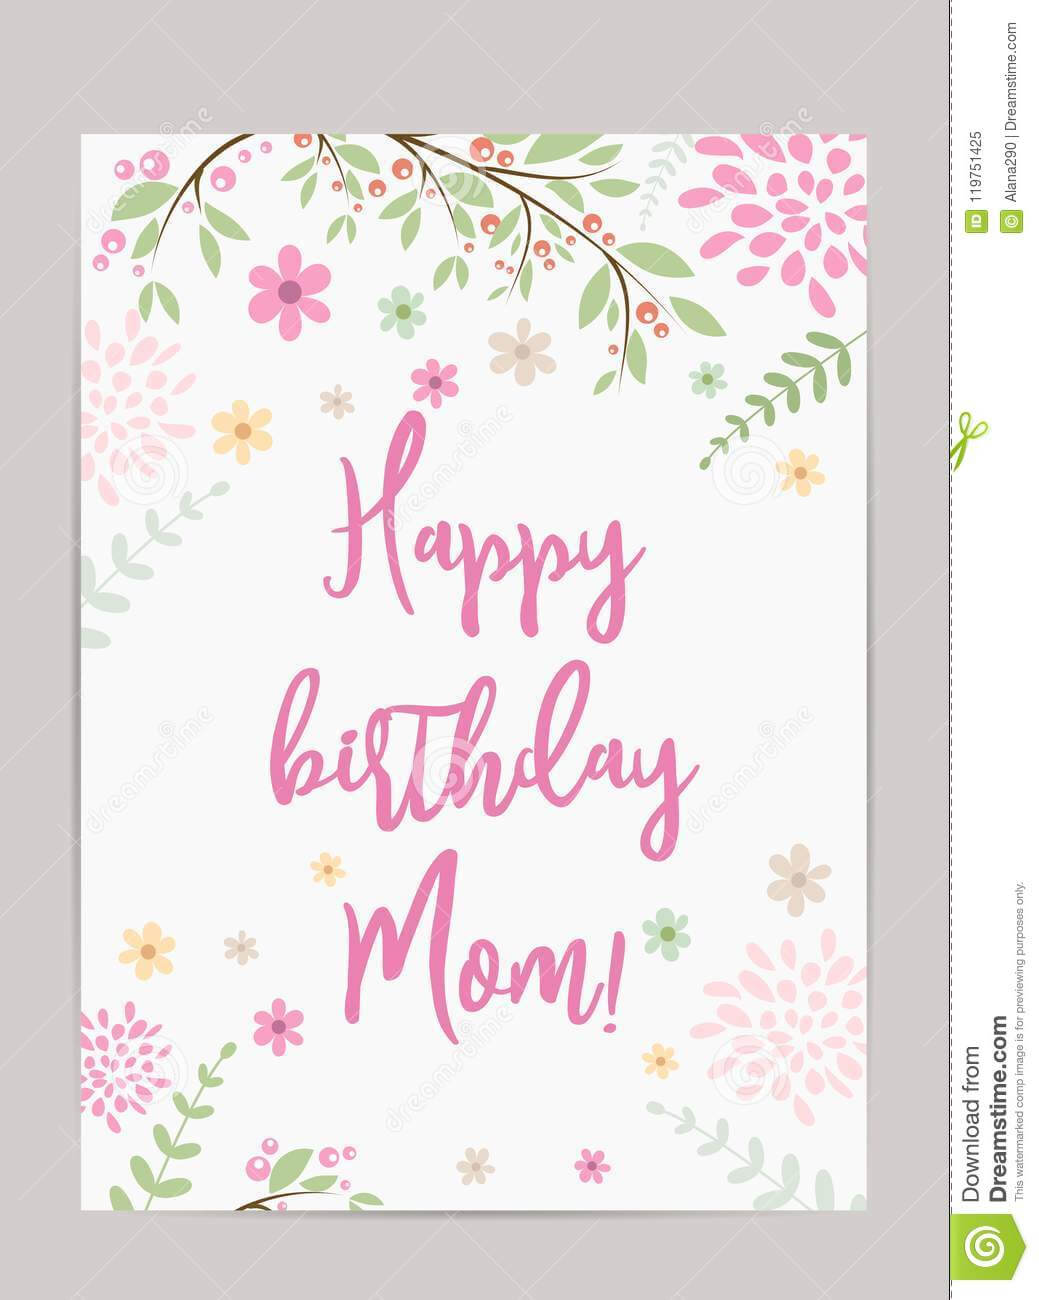 Happy Birthday Mom! Greeting Card Stock Vector Inside Mom Birthday Card Template